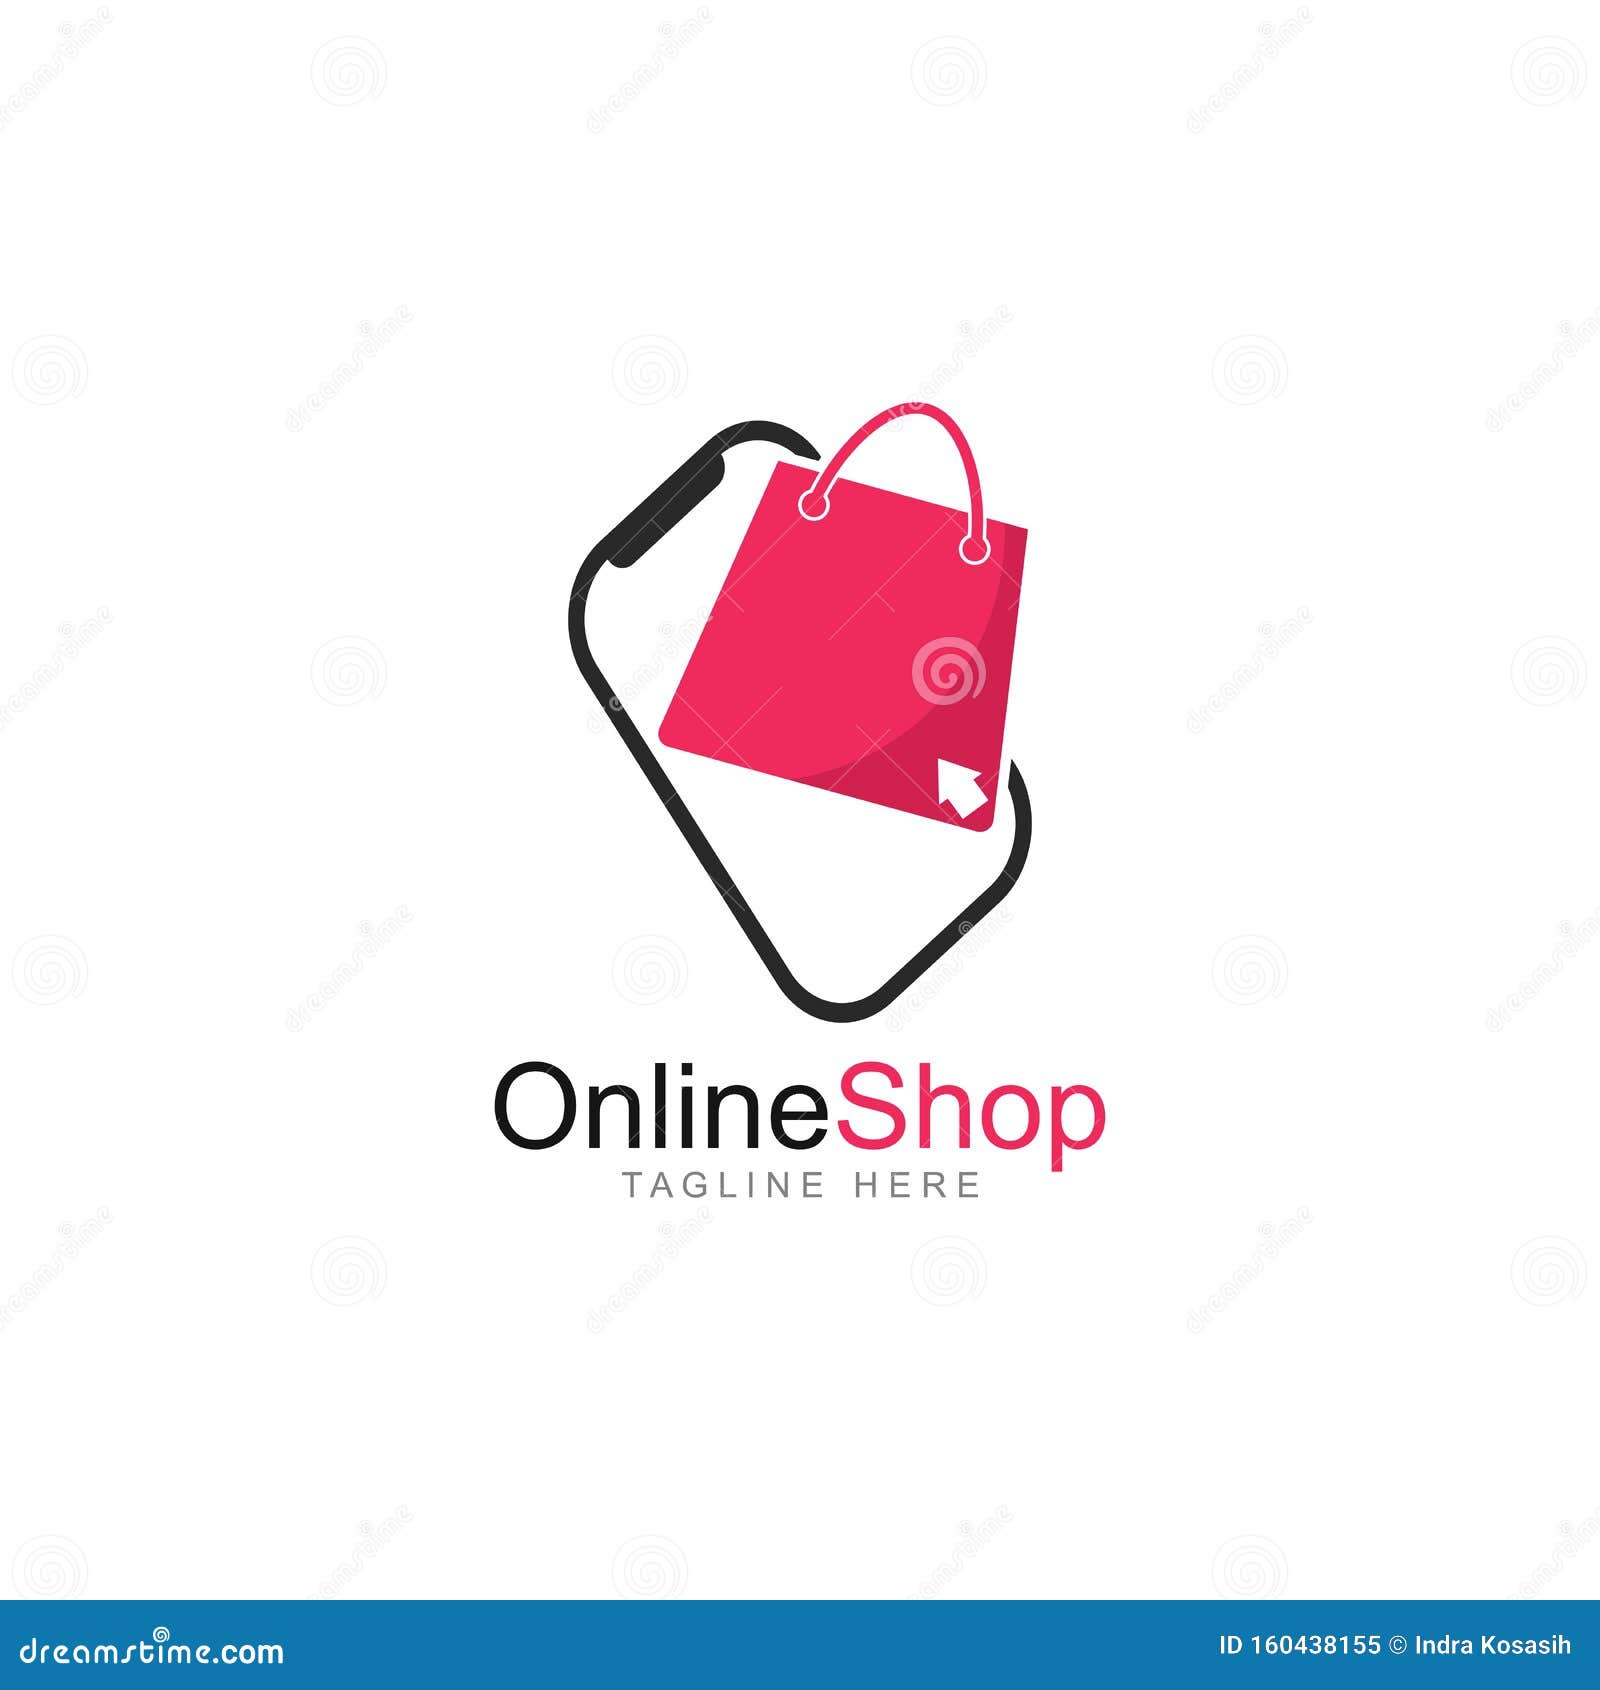 Online shop vector logo stock vector. Illustration of logotype ...